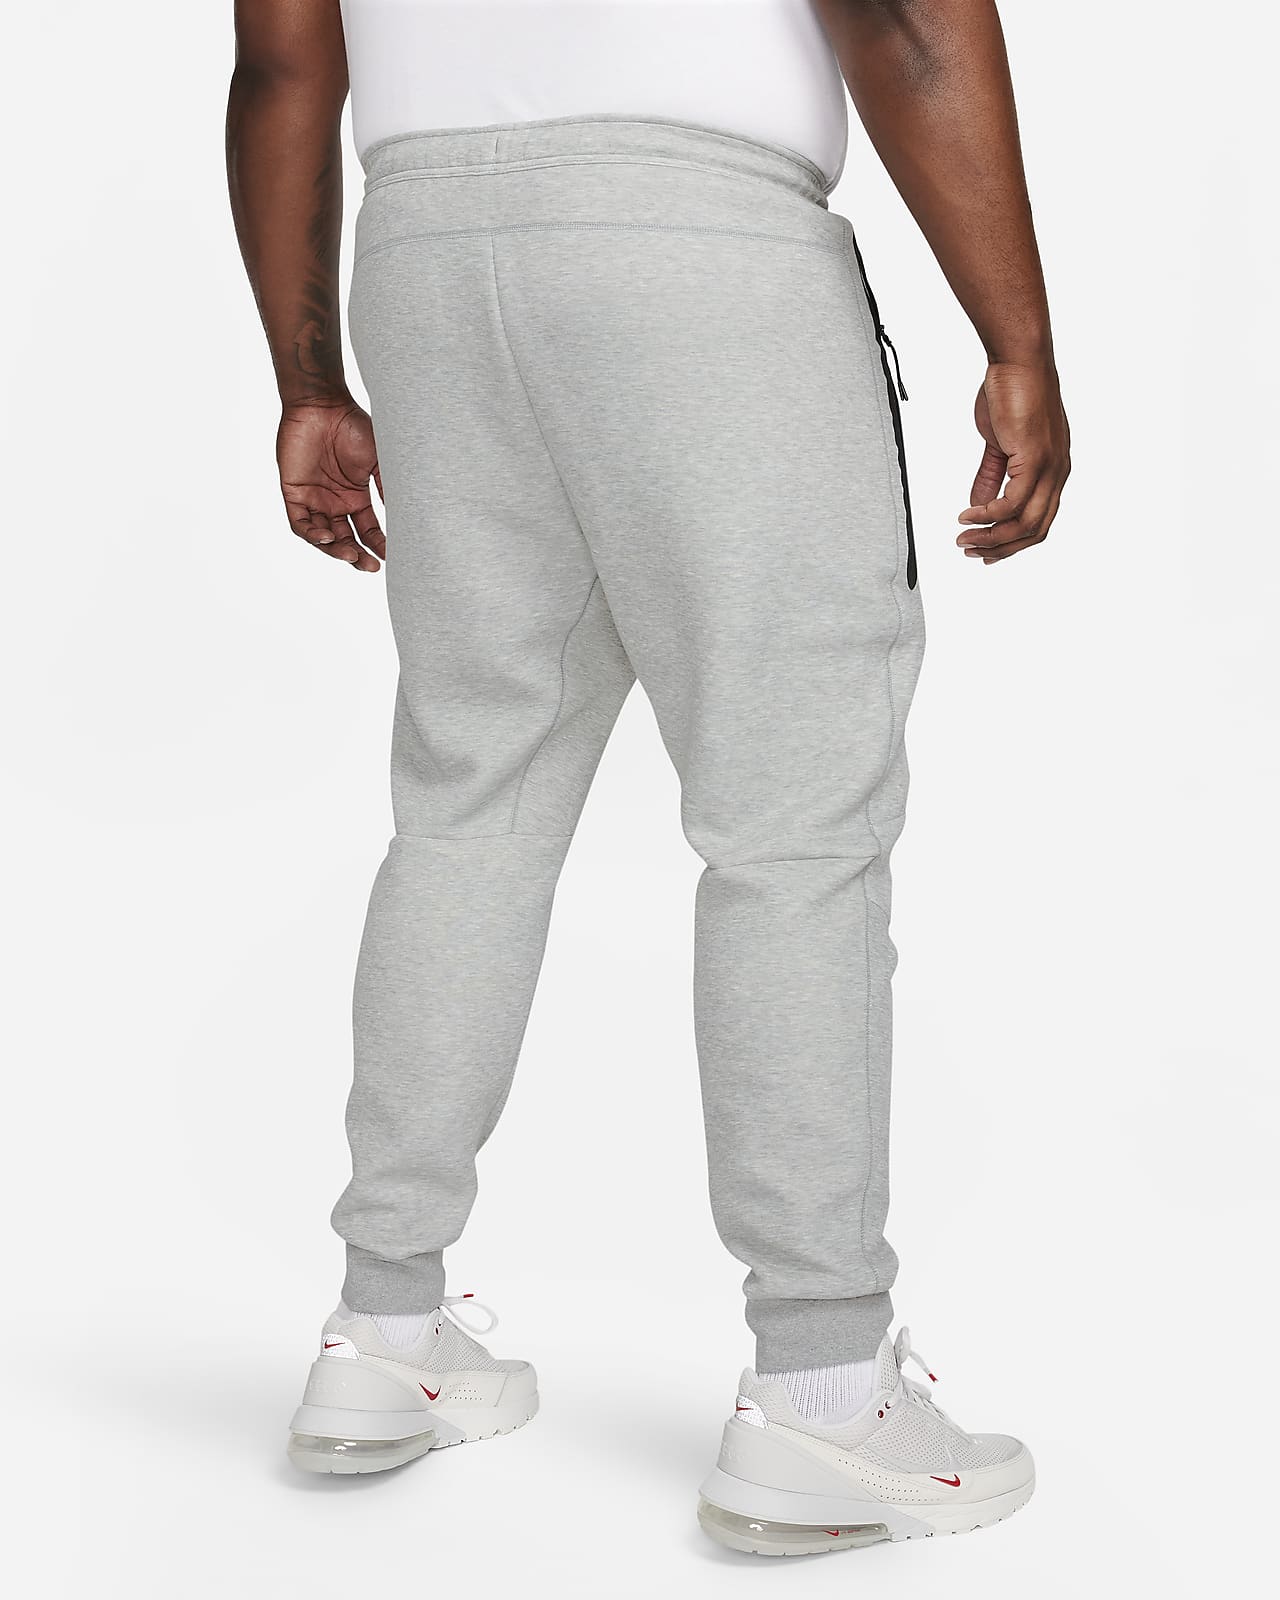 Nike tech fleece cuffed grey tracksuit